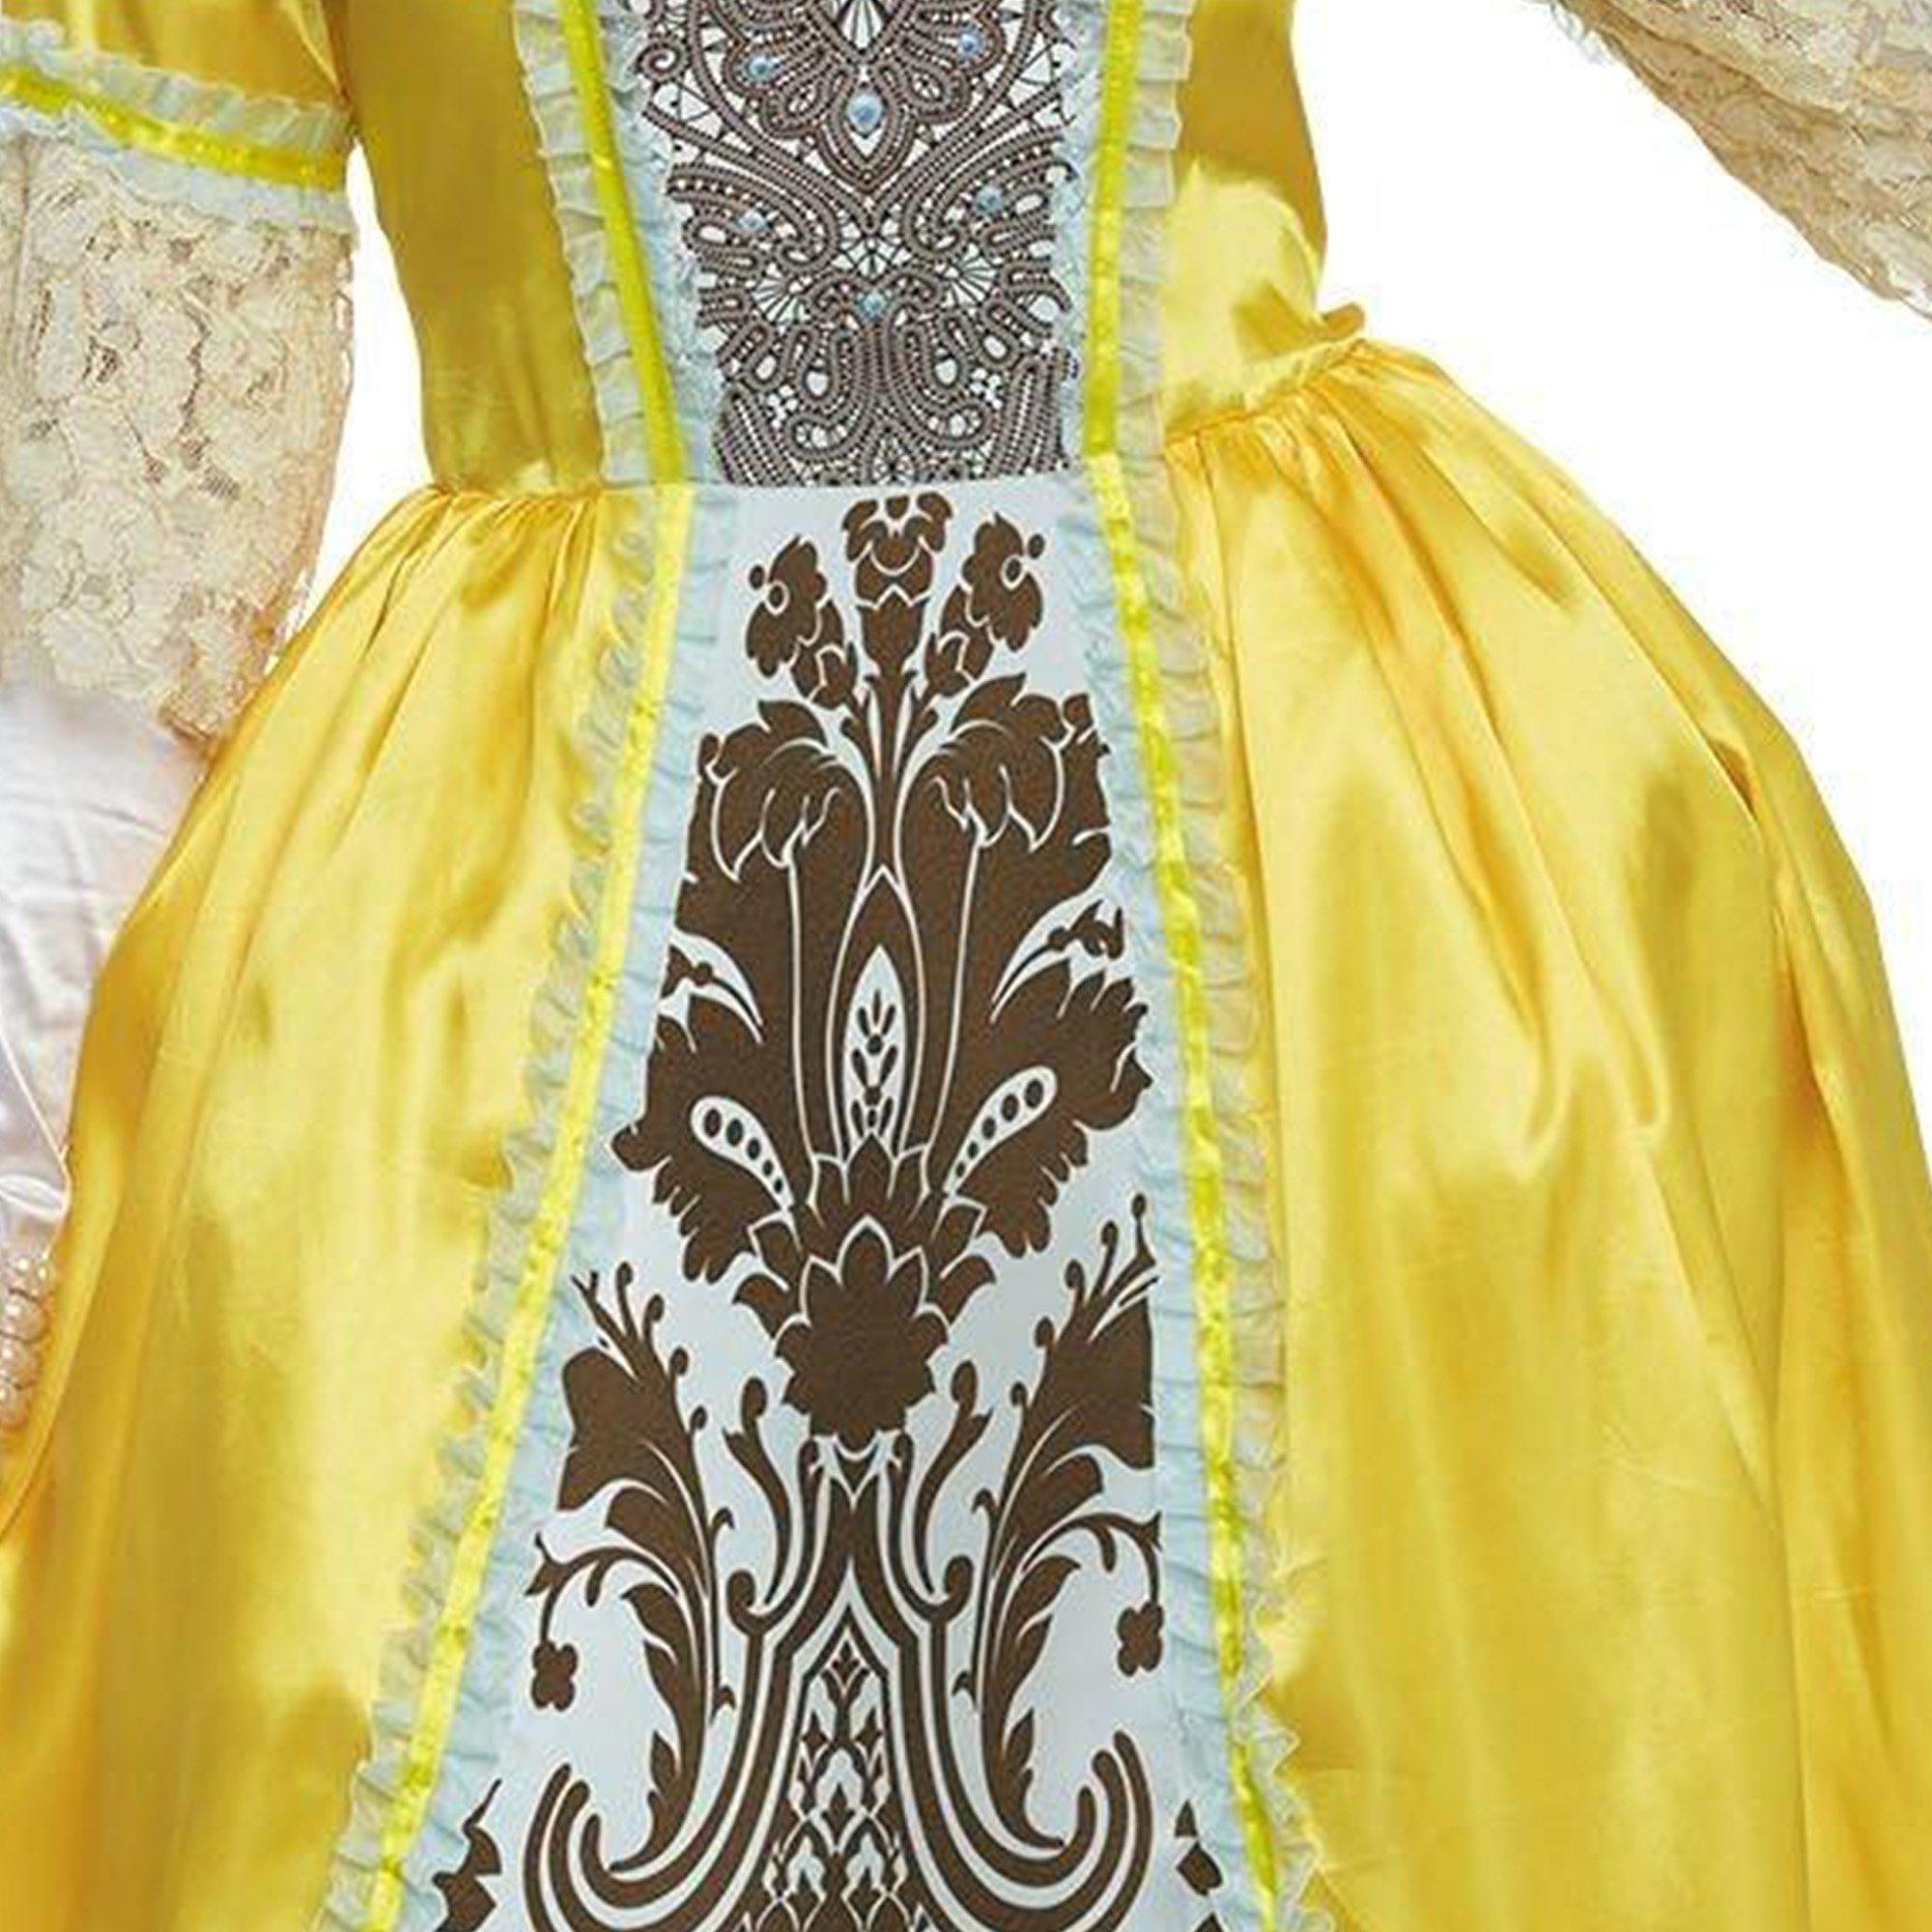 Royal Court Presentation Dress for Adults - Regency Romance